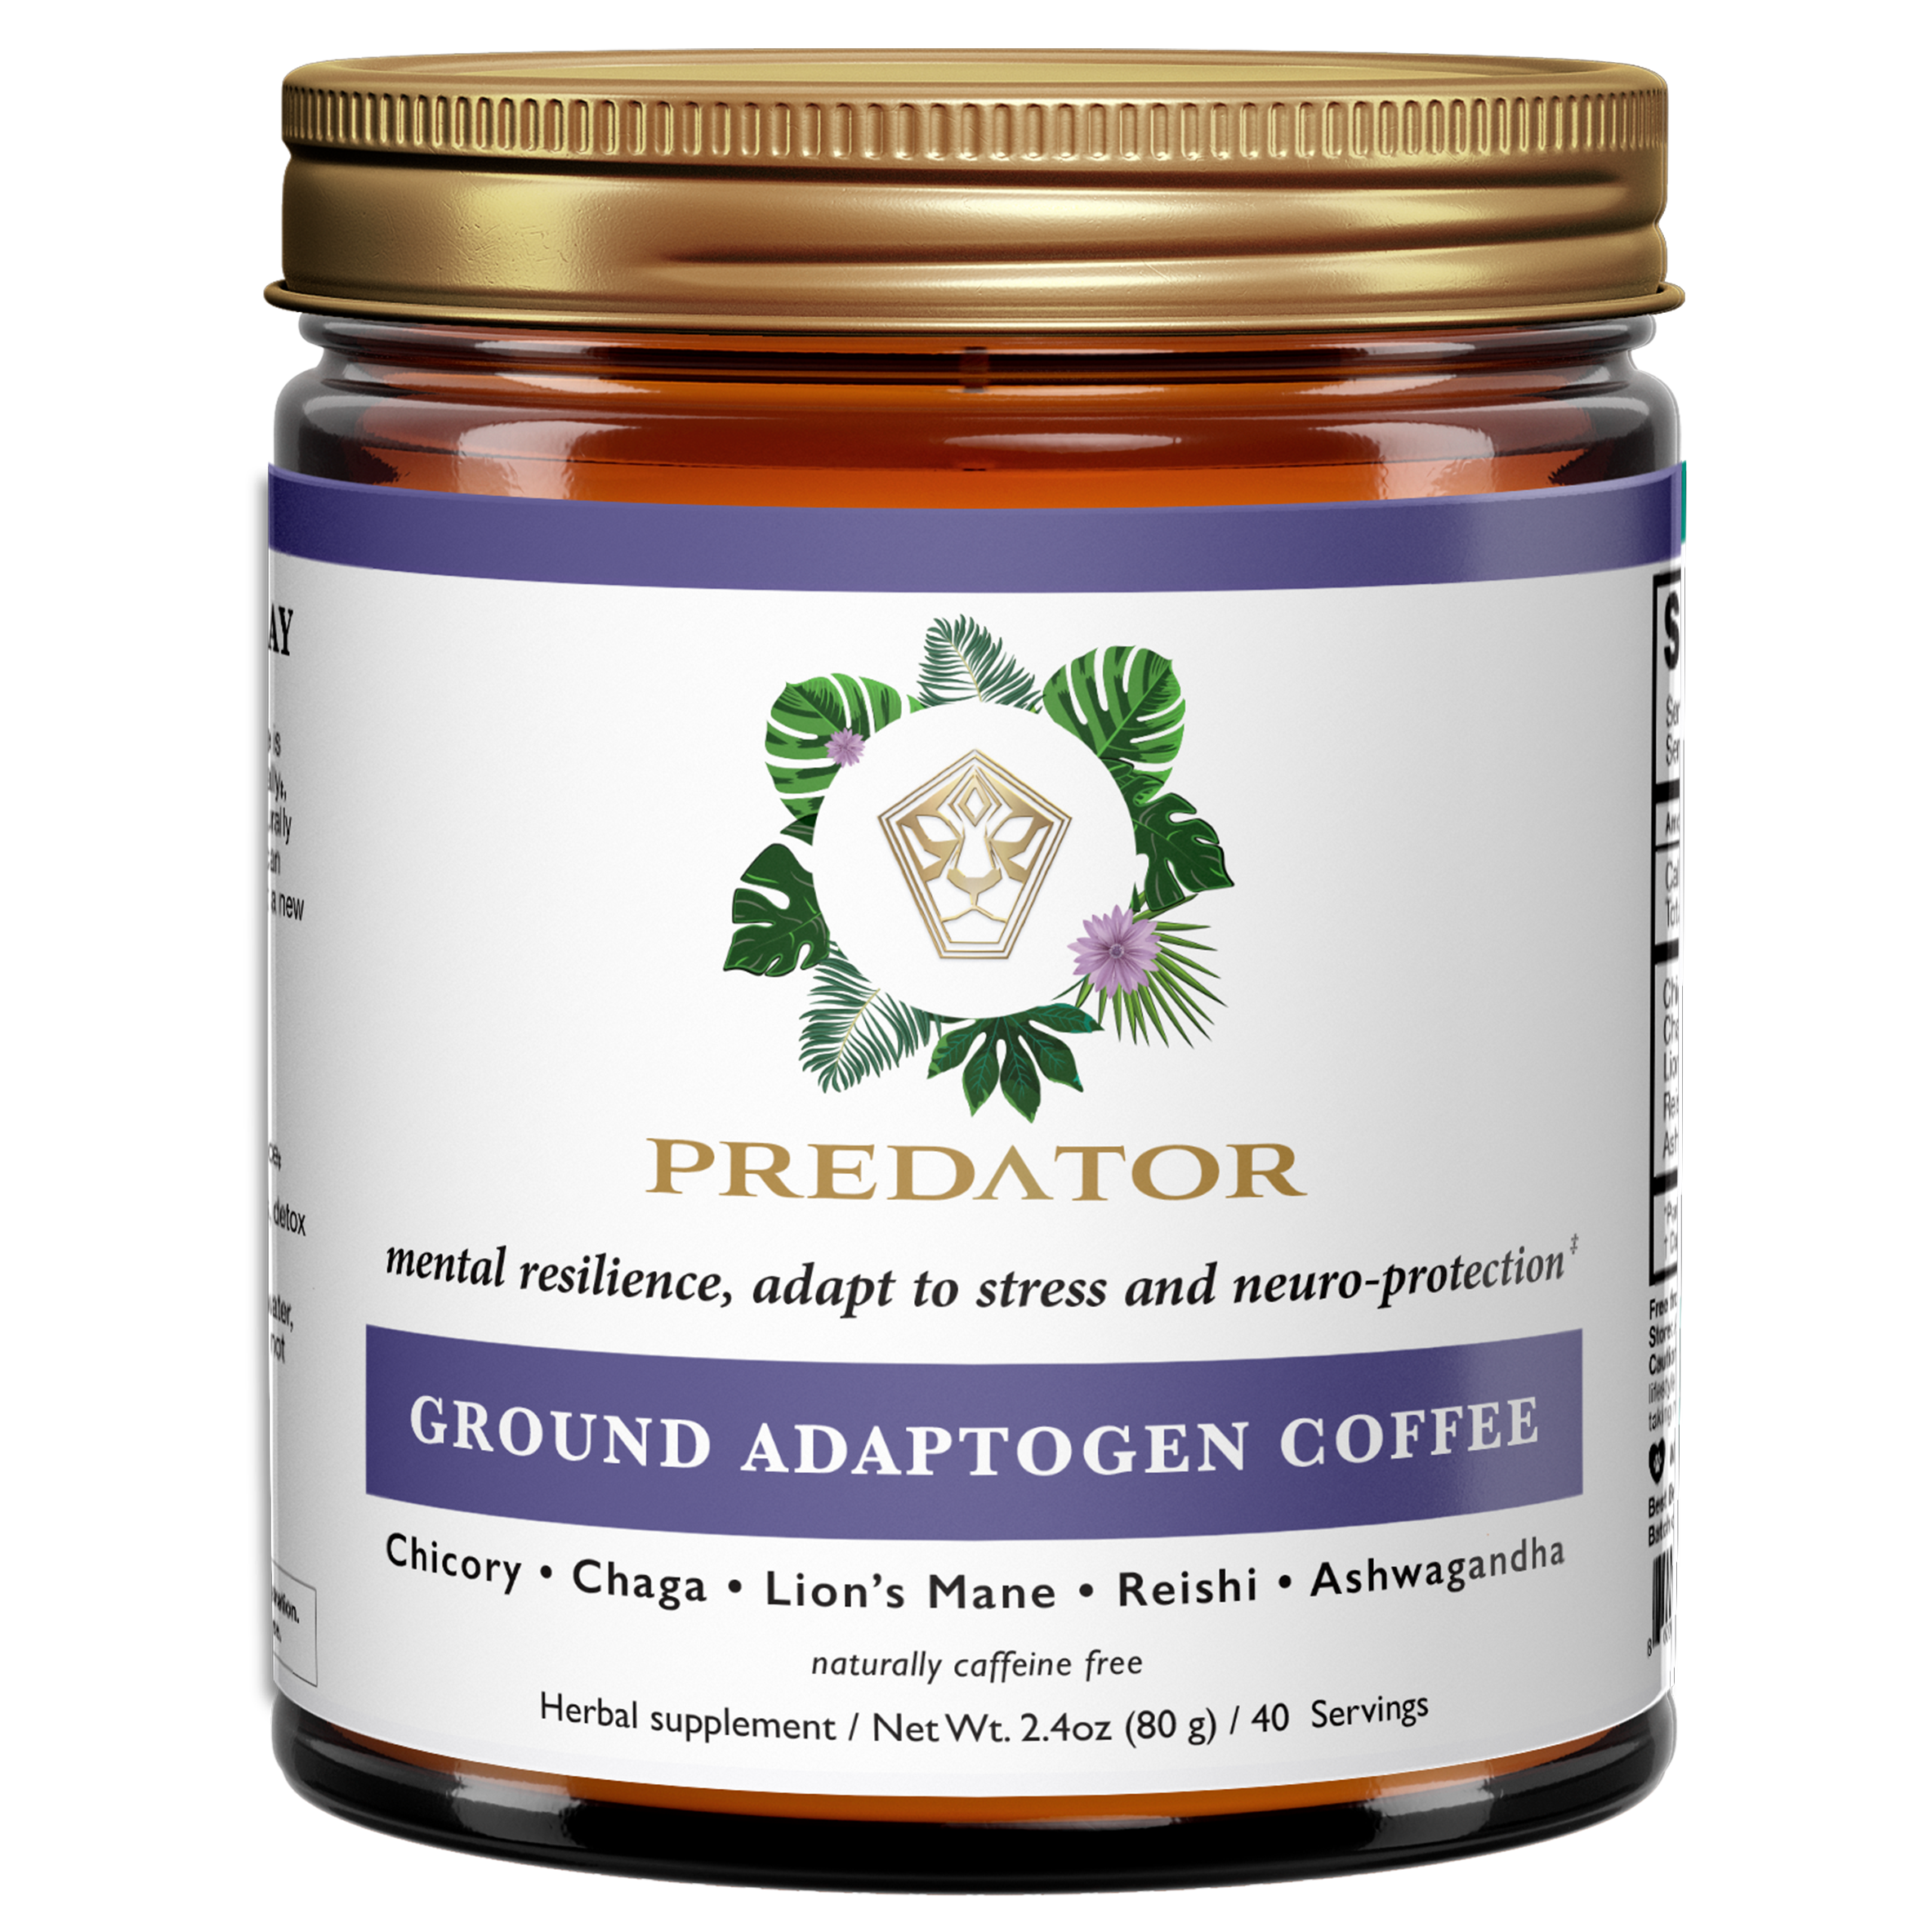 Ground Adaptogen Coffee - Mushrooms and Adaptogens - Chicorei Root, Reishi, Lions Mane, Chaga, Ashwagandha - Free of Caffeine